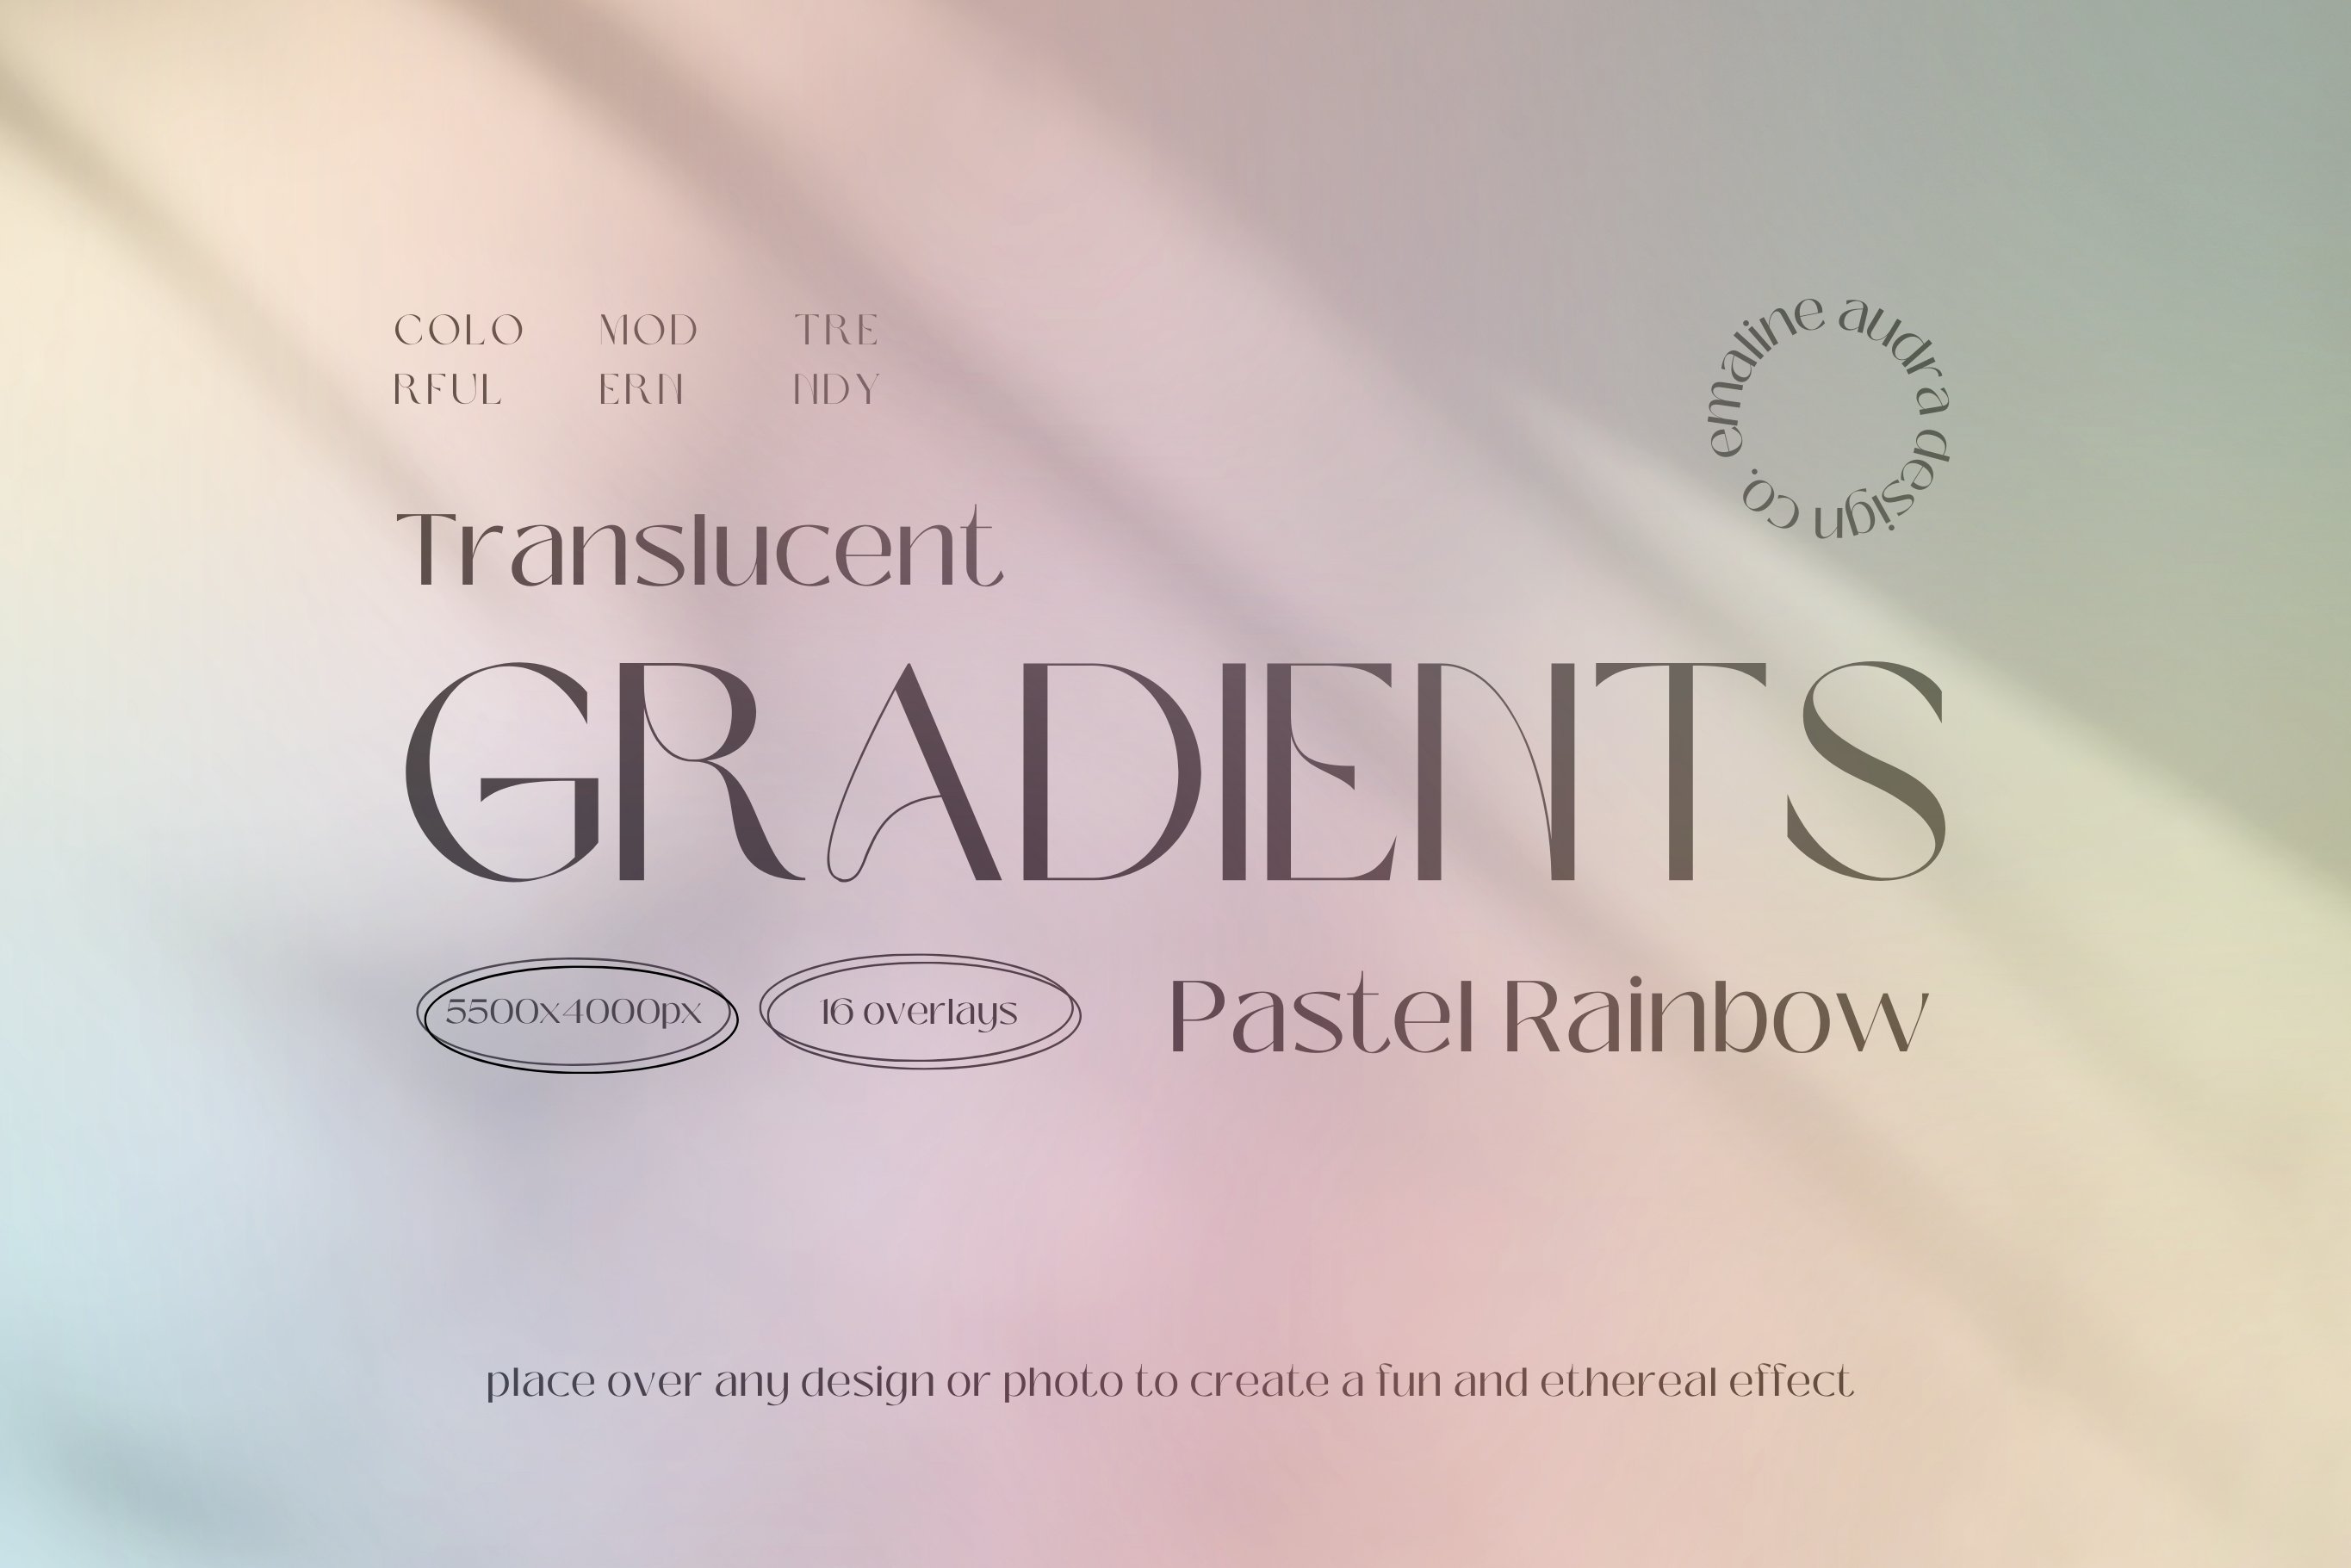 16 Pastel Rainbow Gradient Overlays cover image.